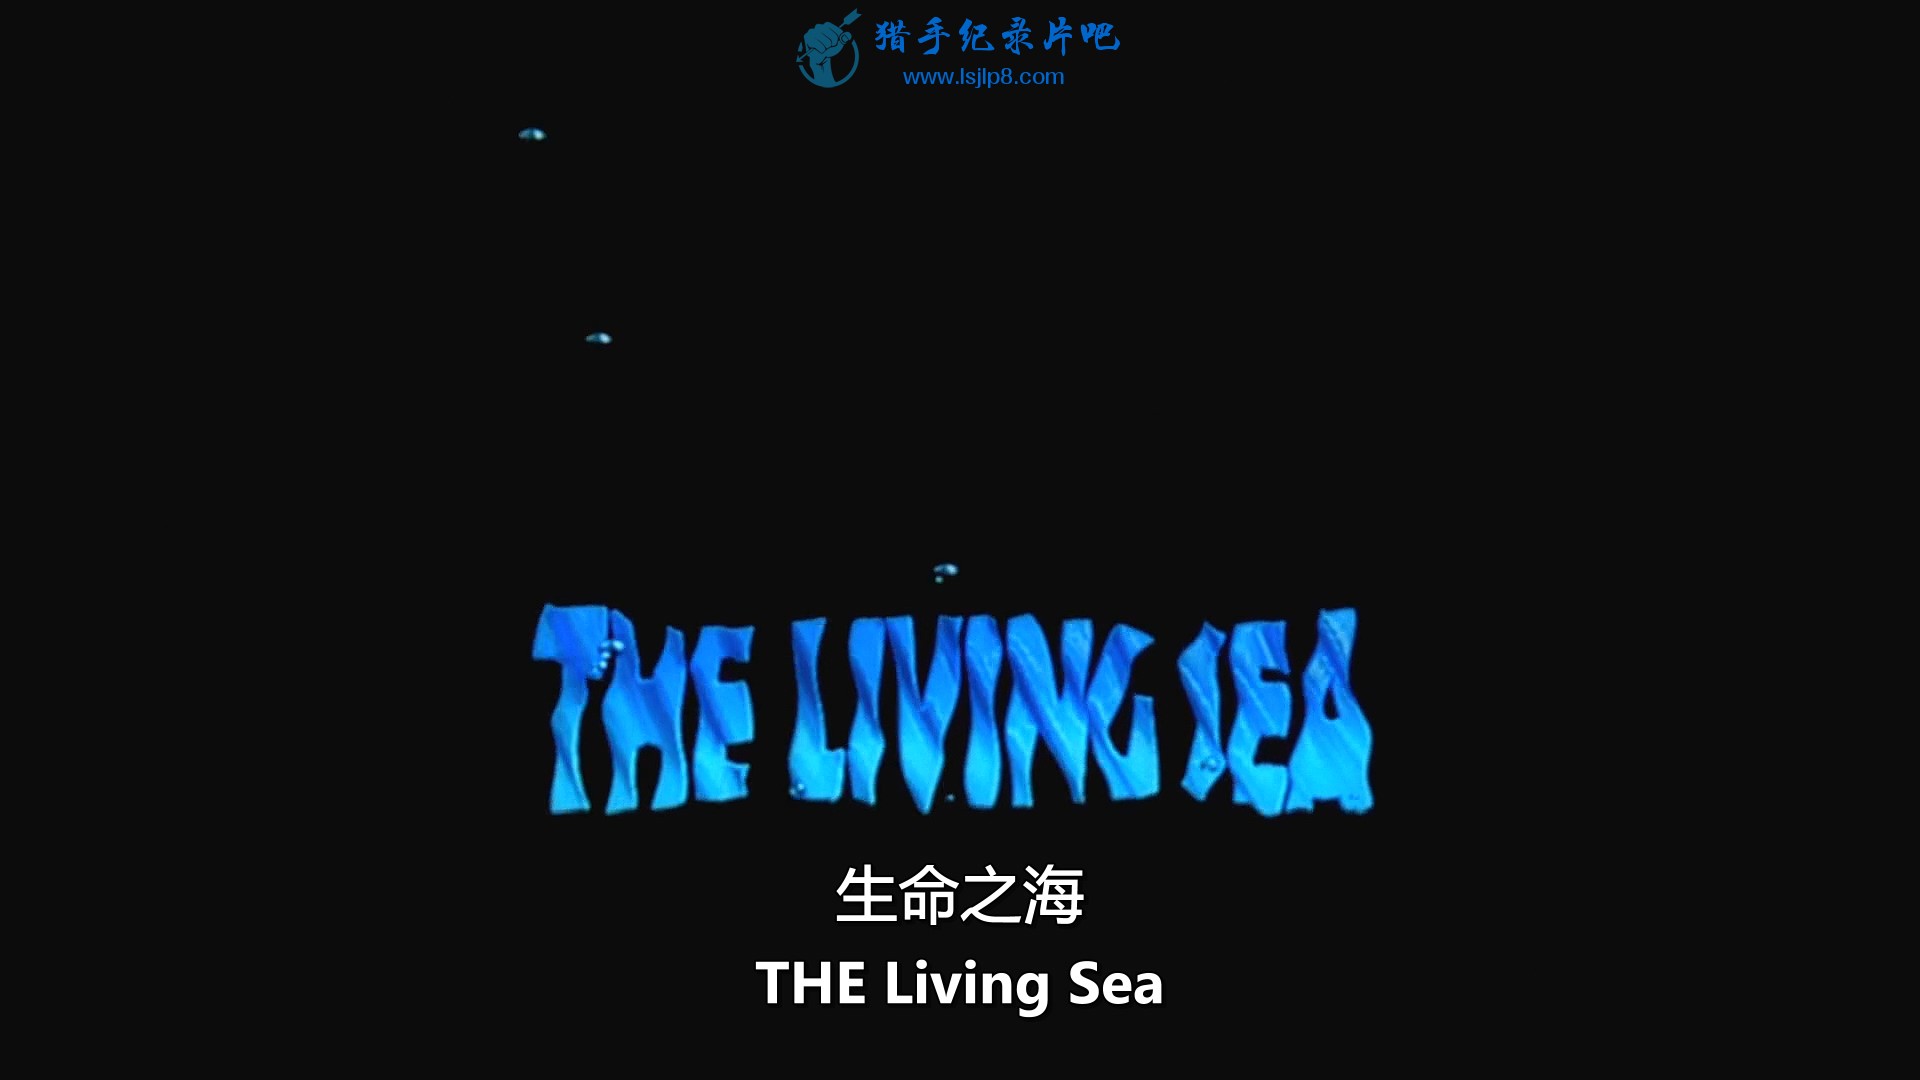 The.Living.Sea.IMAX.Blu-ray.RE.1080.X264.DTS.SiluHD.mkv_20190928_101705.823.jpg